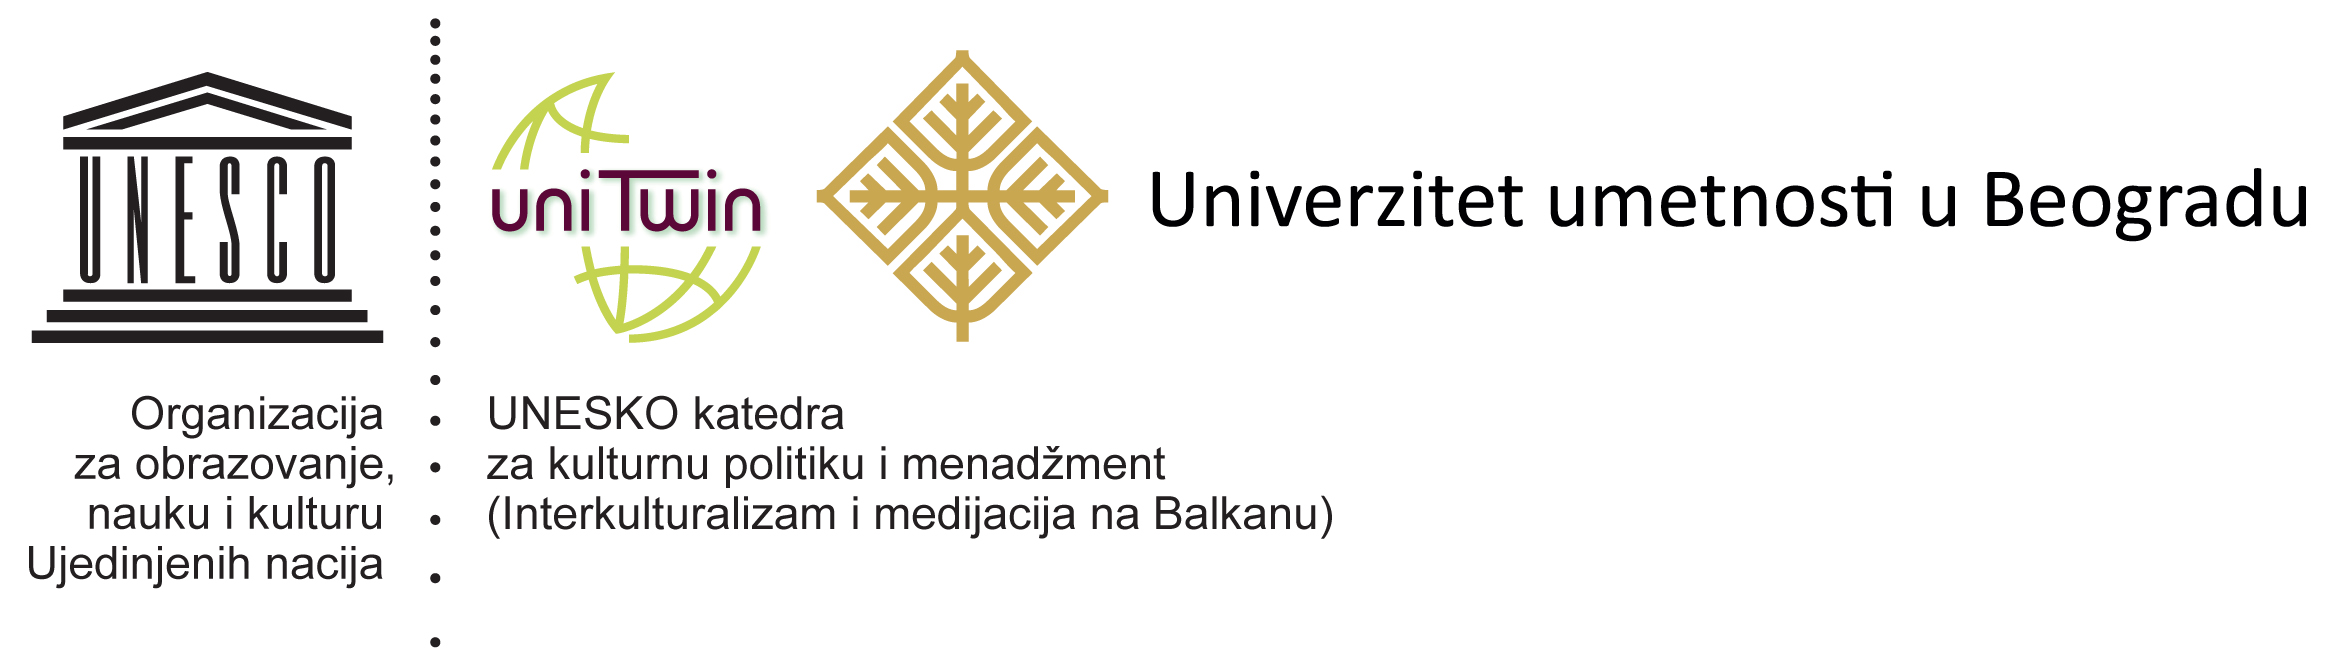 Univerzitet umetnosti, UNESKO katedra za kulturnu politiku i menadžement